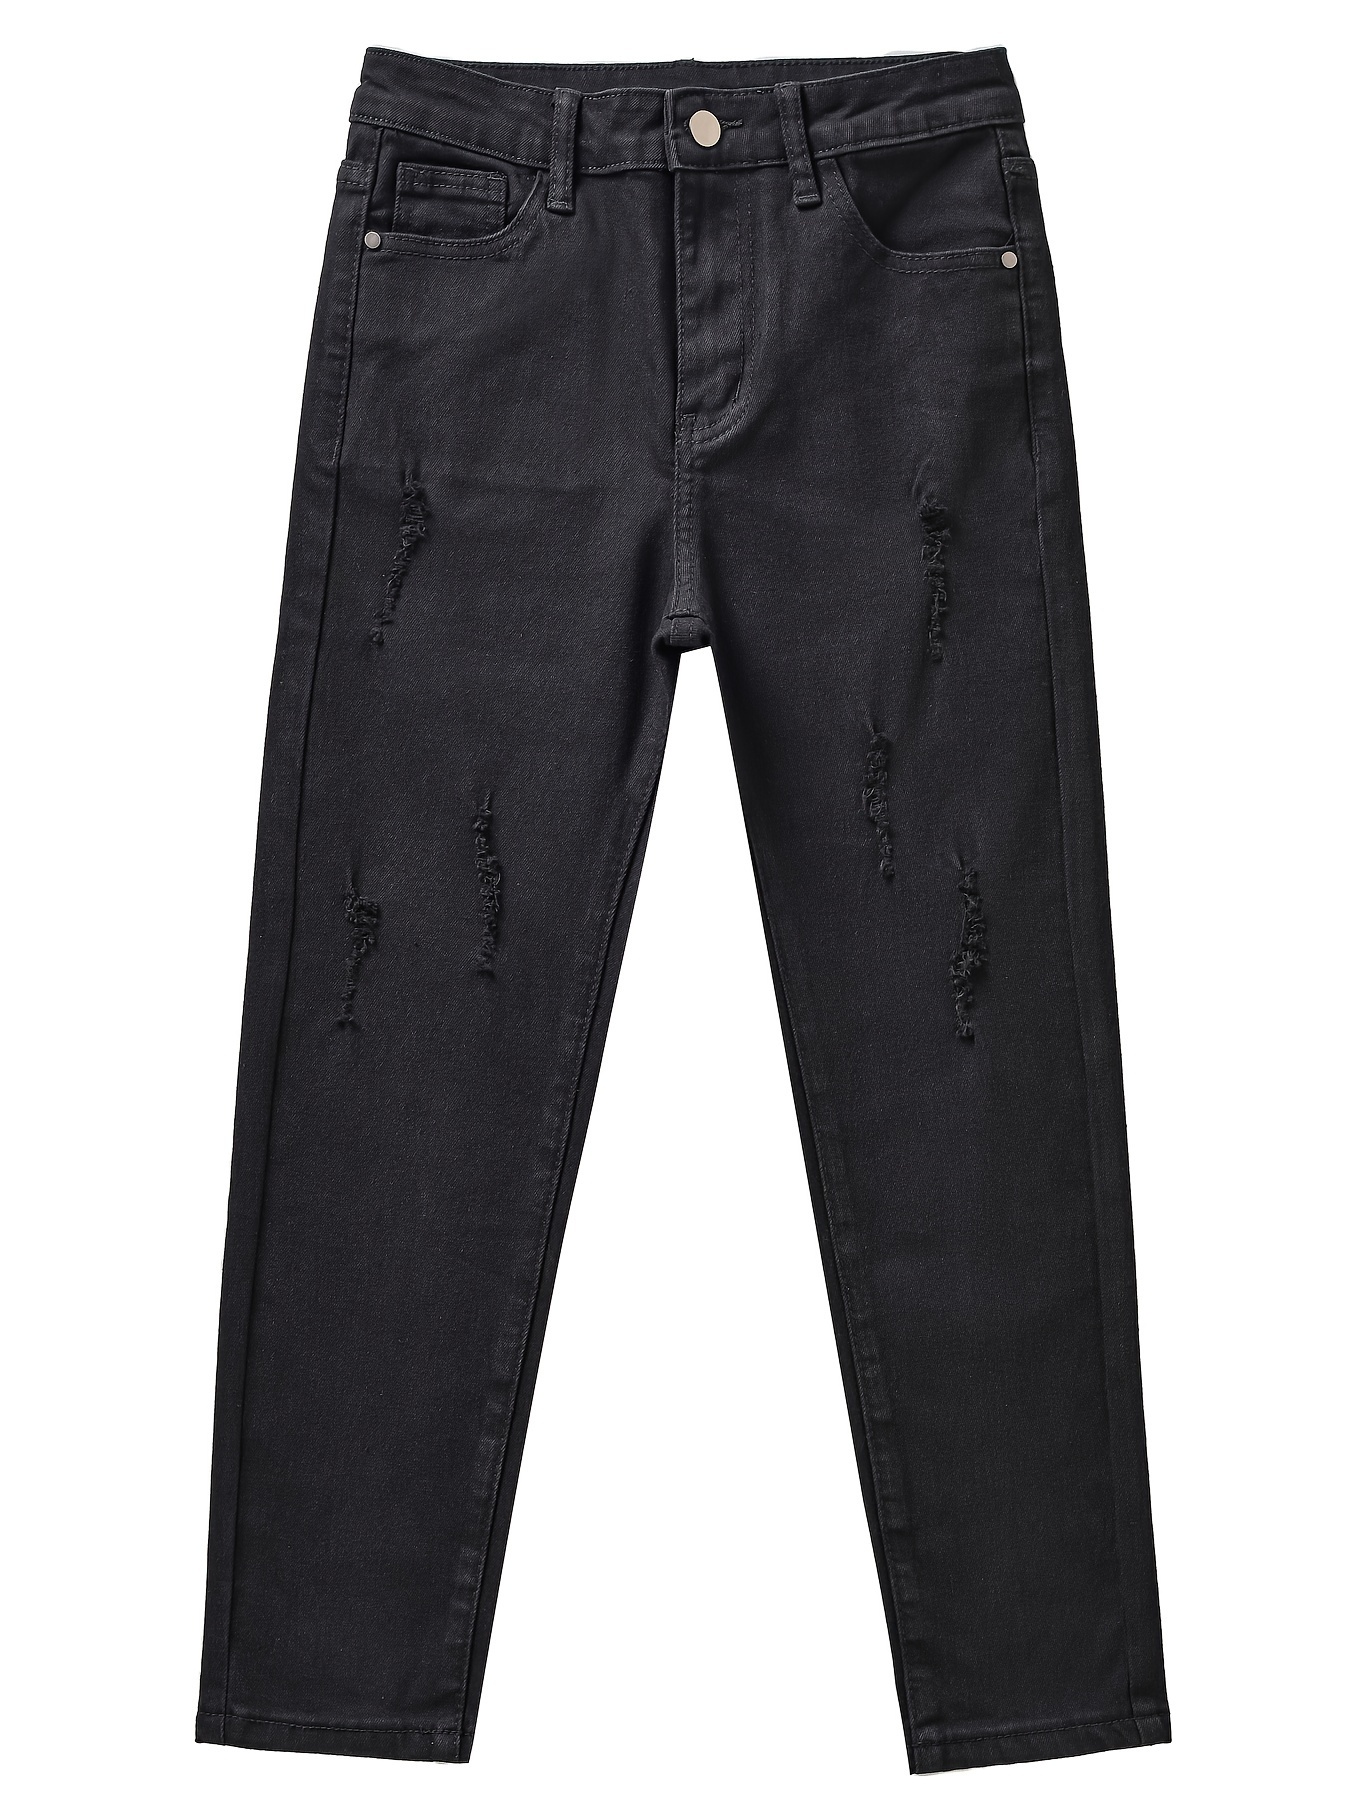 Boys Black Stretch Skinny Slim Fit Jeans Pocket Cargo Pants Kids Clothes